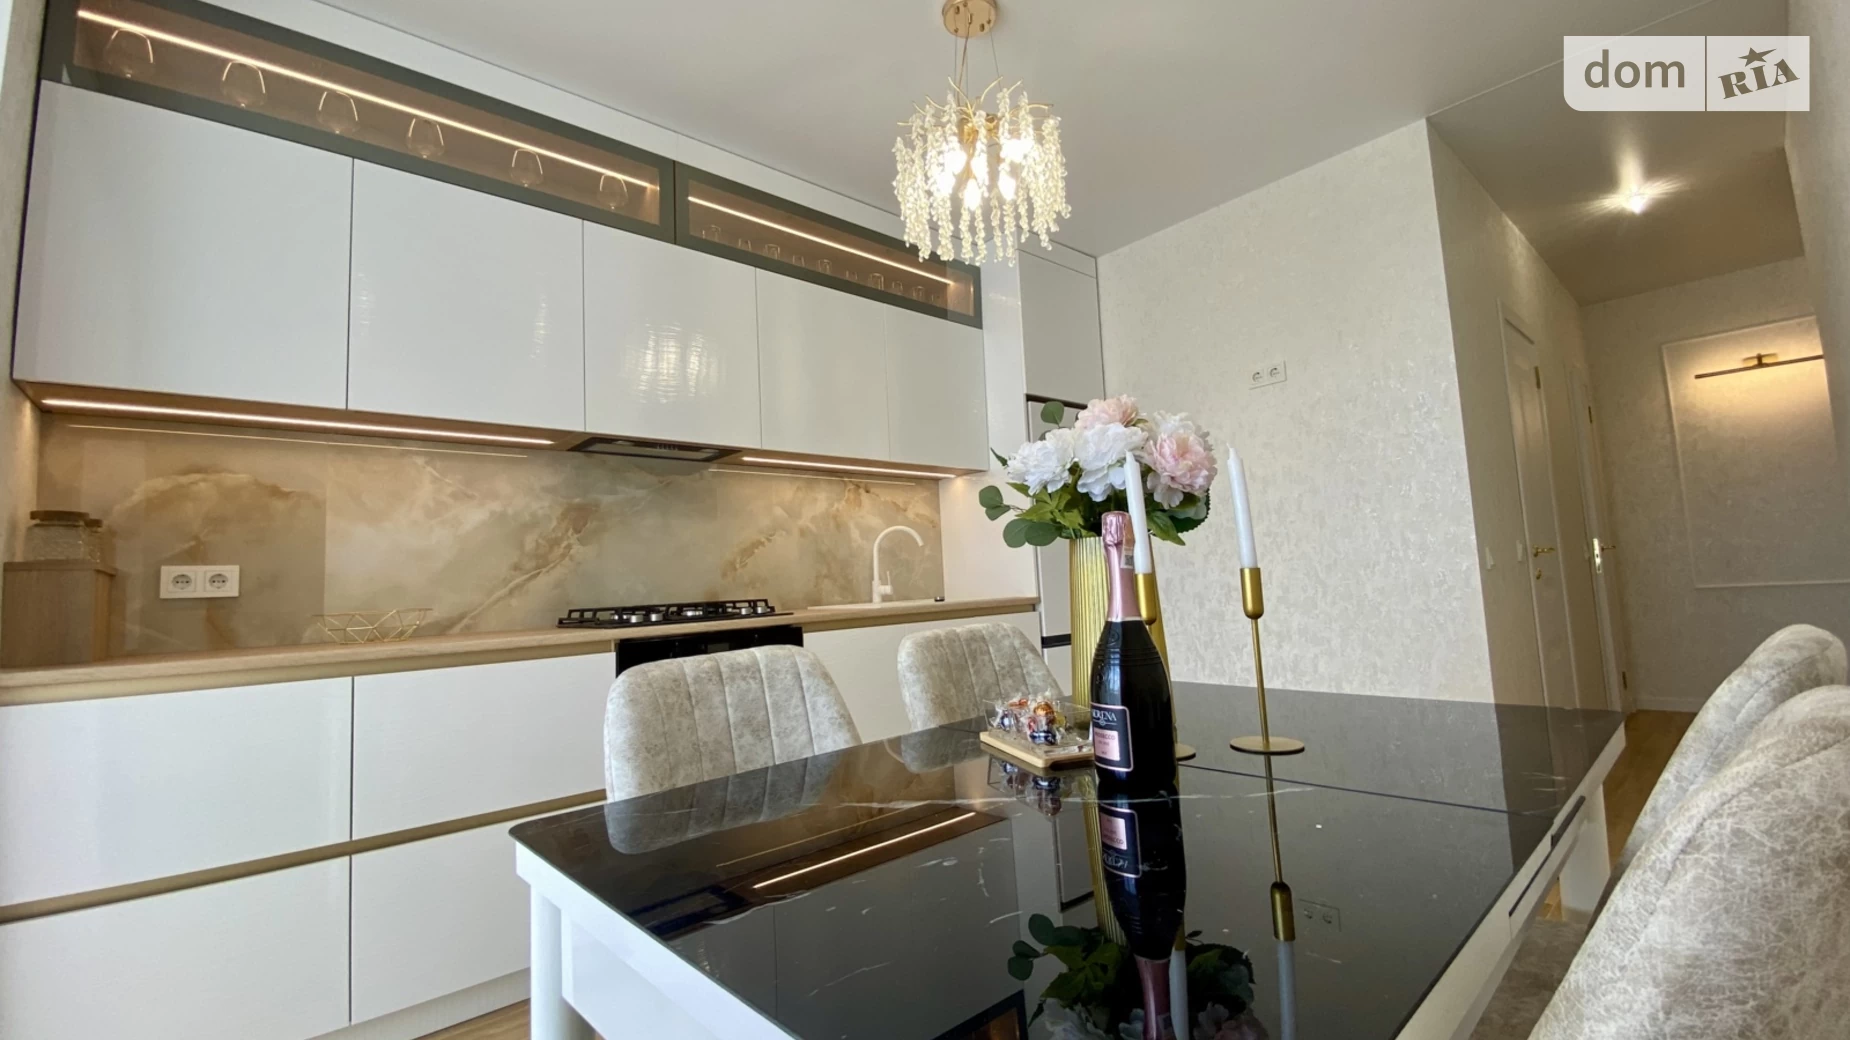 Продается 2-комнатная квартира 64.6 кв. м в Ивано-Франковске, ул. Княгинин, 44 секція 21 - фото 2